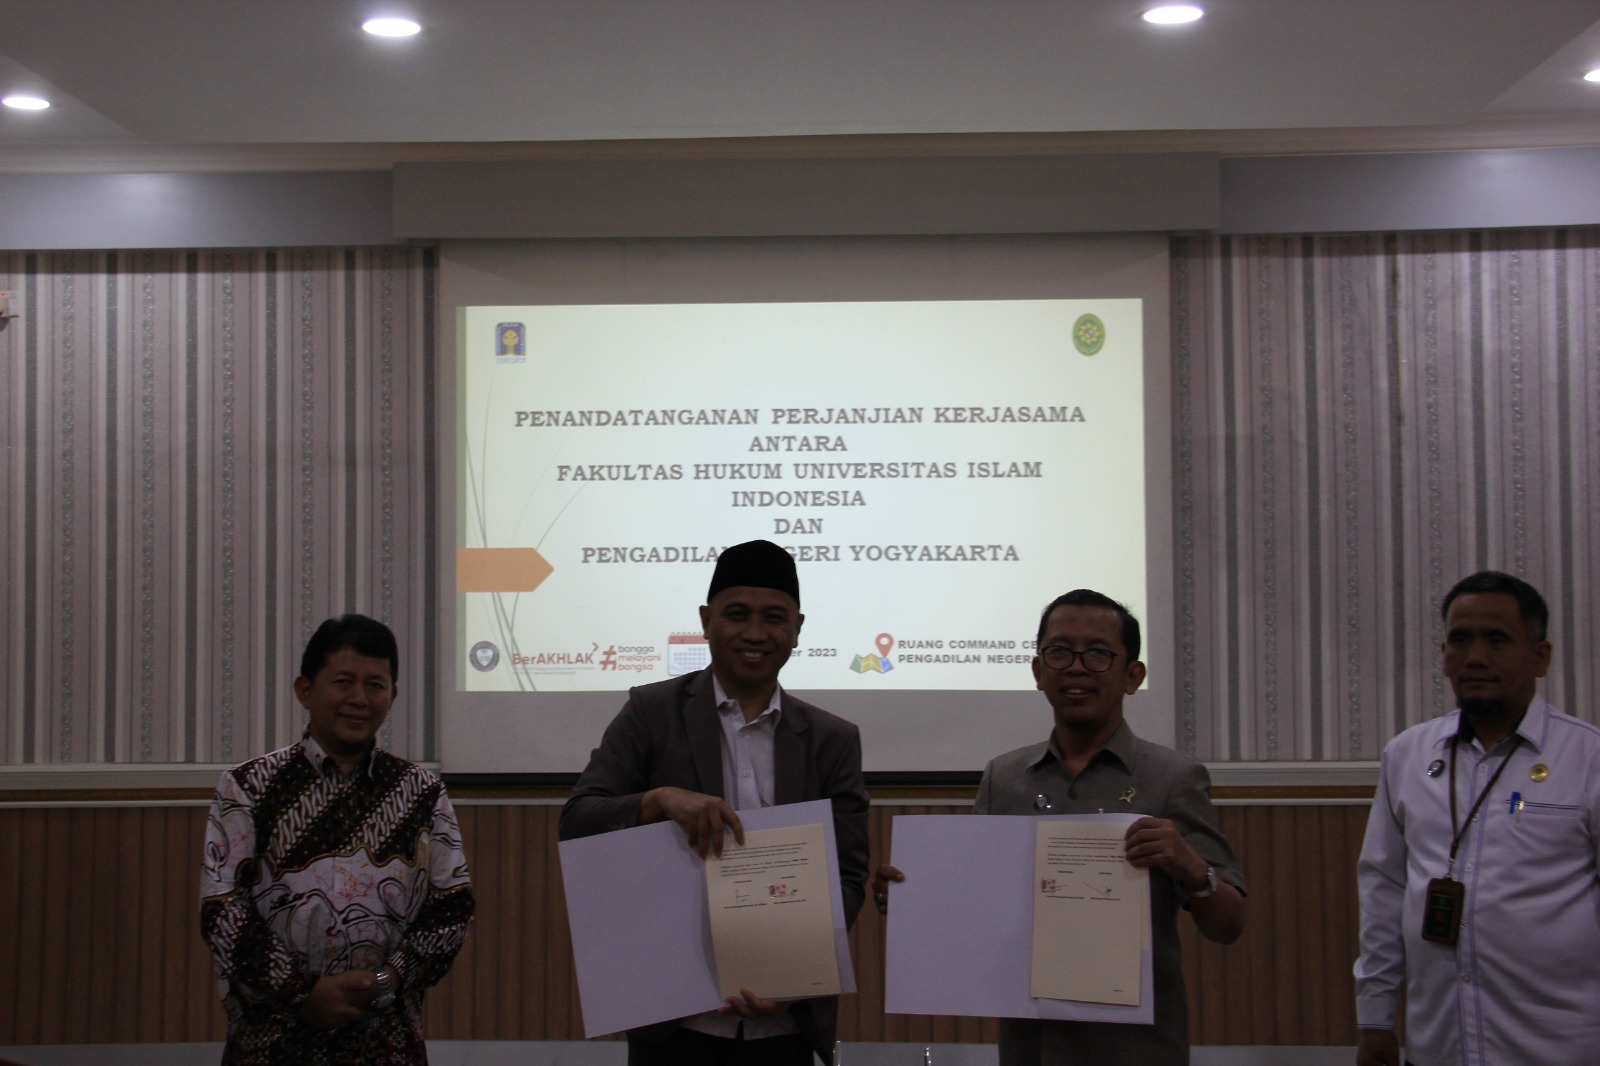 Penandatanganan Pembaharuan Perjanjian Kerjasama antara Pengadilan Negeri Yogyakarta dengan Fakultas Hukum Universitas Islam Indonesia